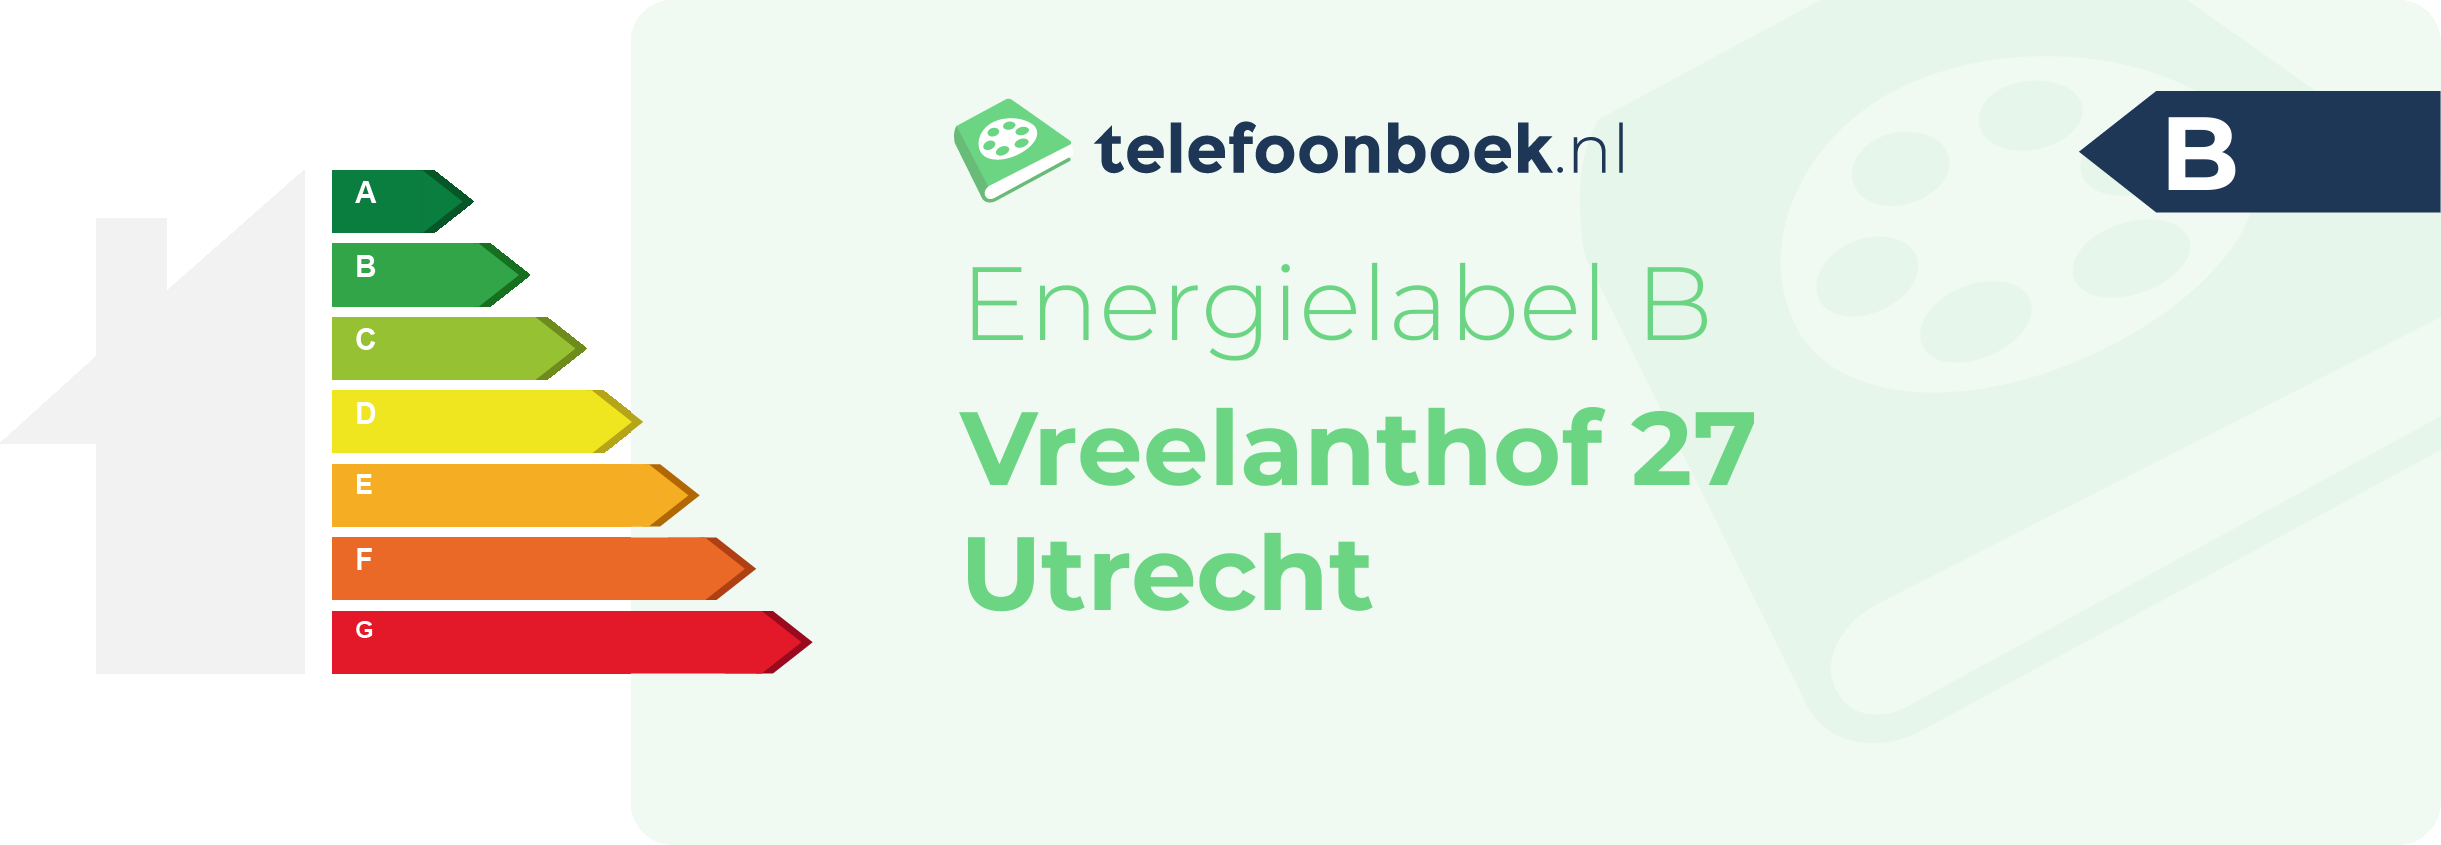 Energielabel Vreelanthof 27 Utrecht